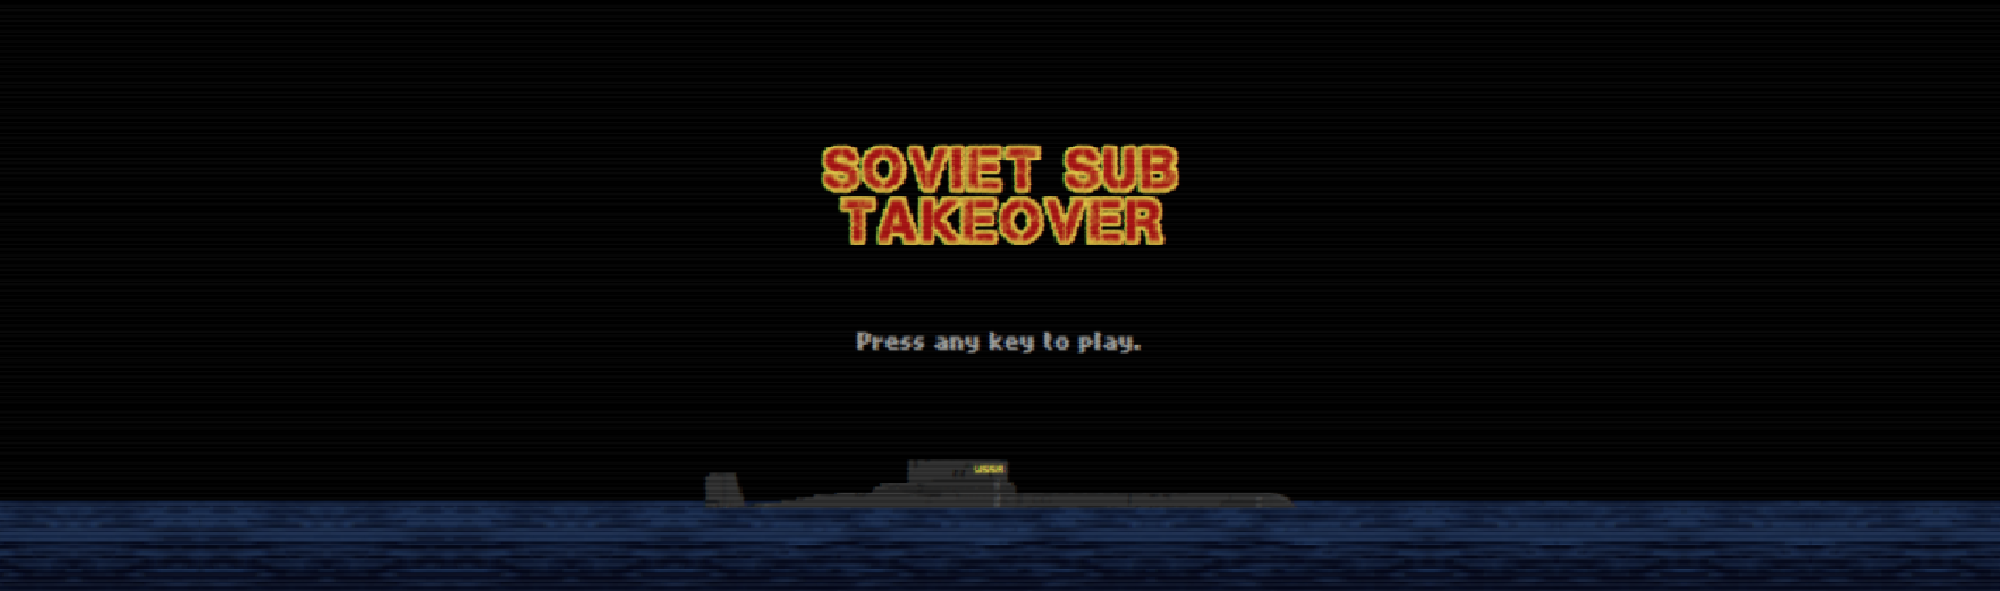 Soviet Sub Takeover